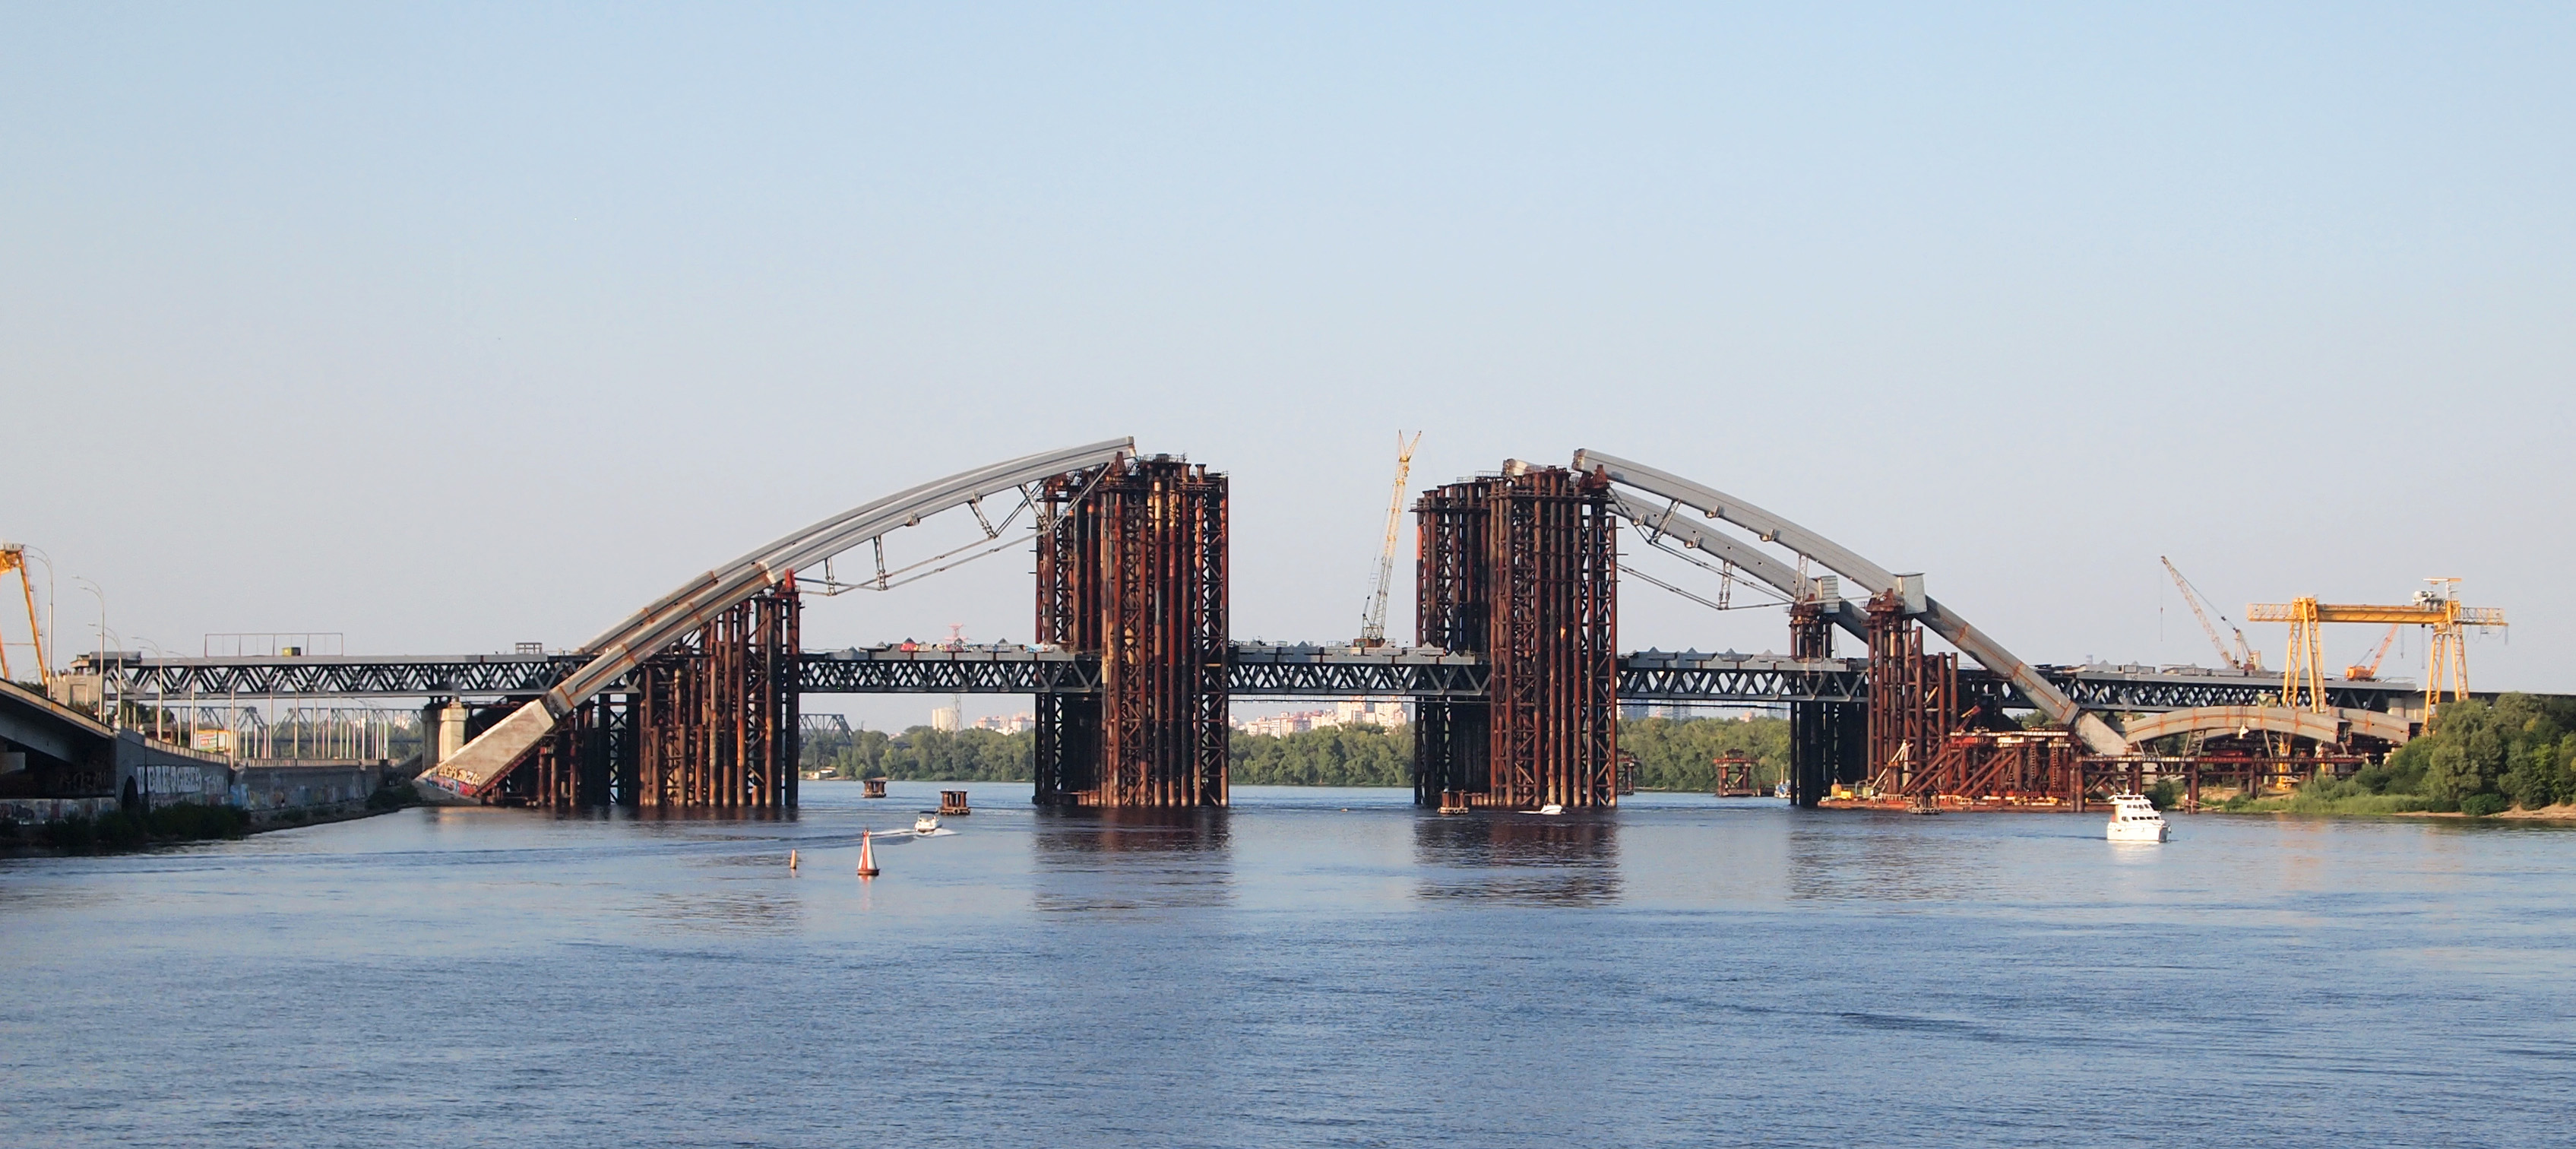 File:Kiev - bridge construction.jpg - Wikimedia Commons